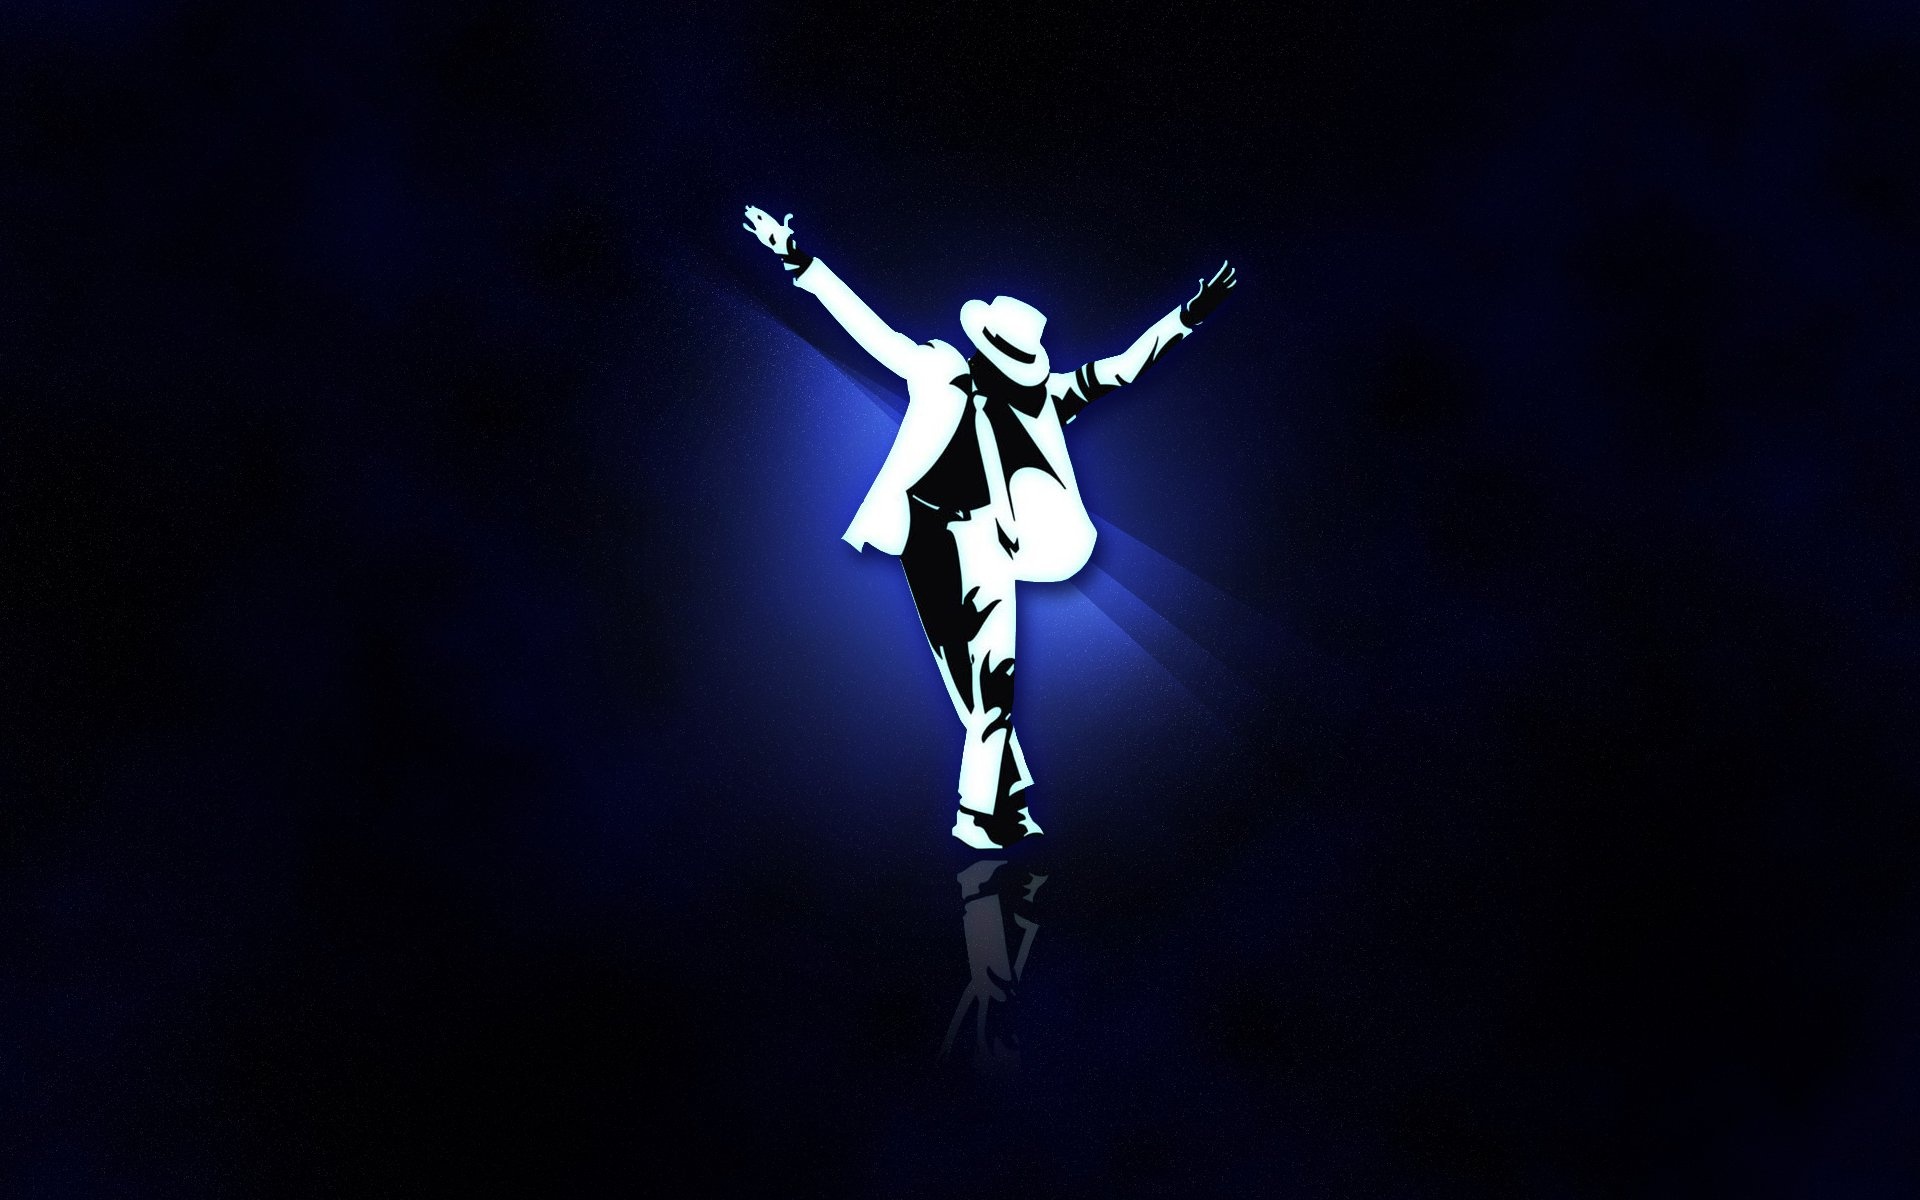 Vibrant wallpaper featuring iconic musician Michael Jackson.